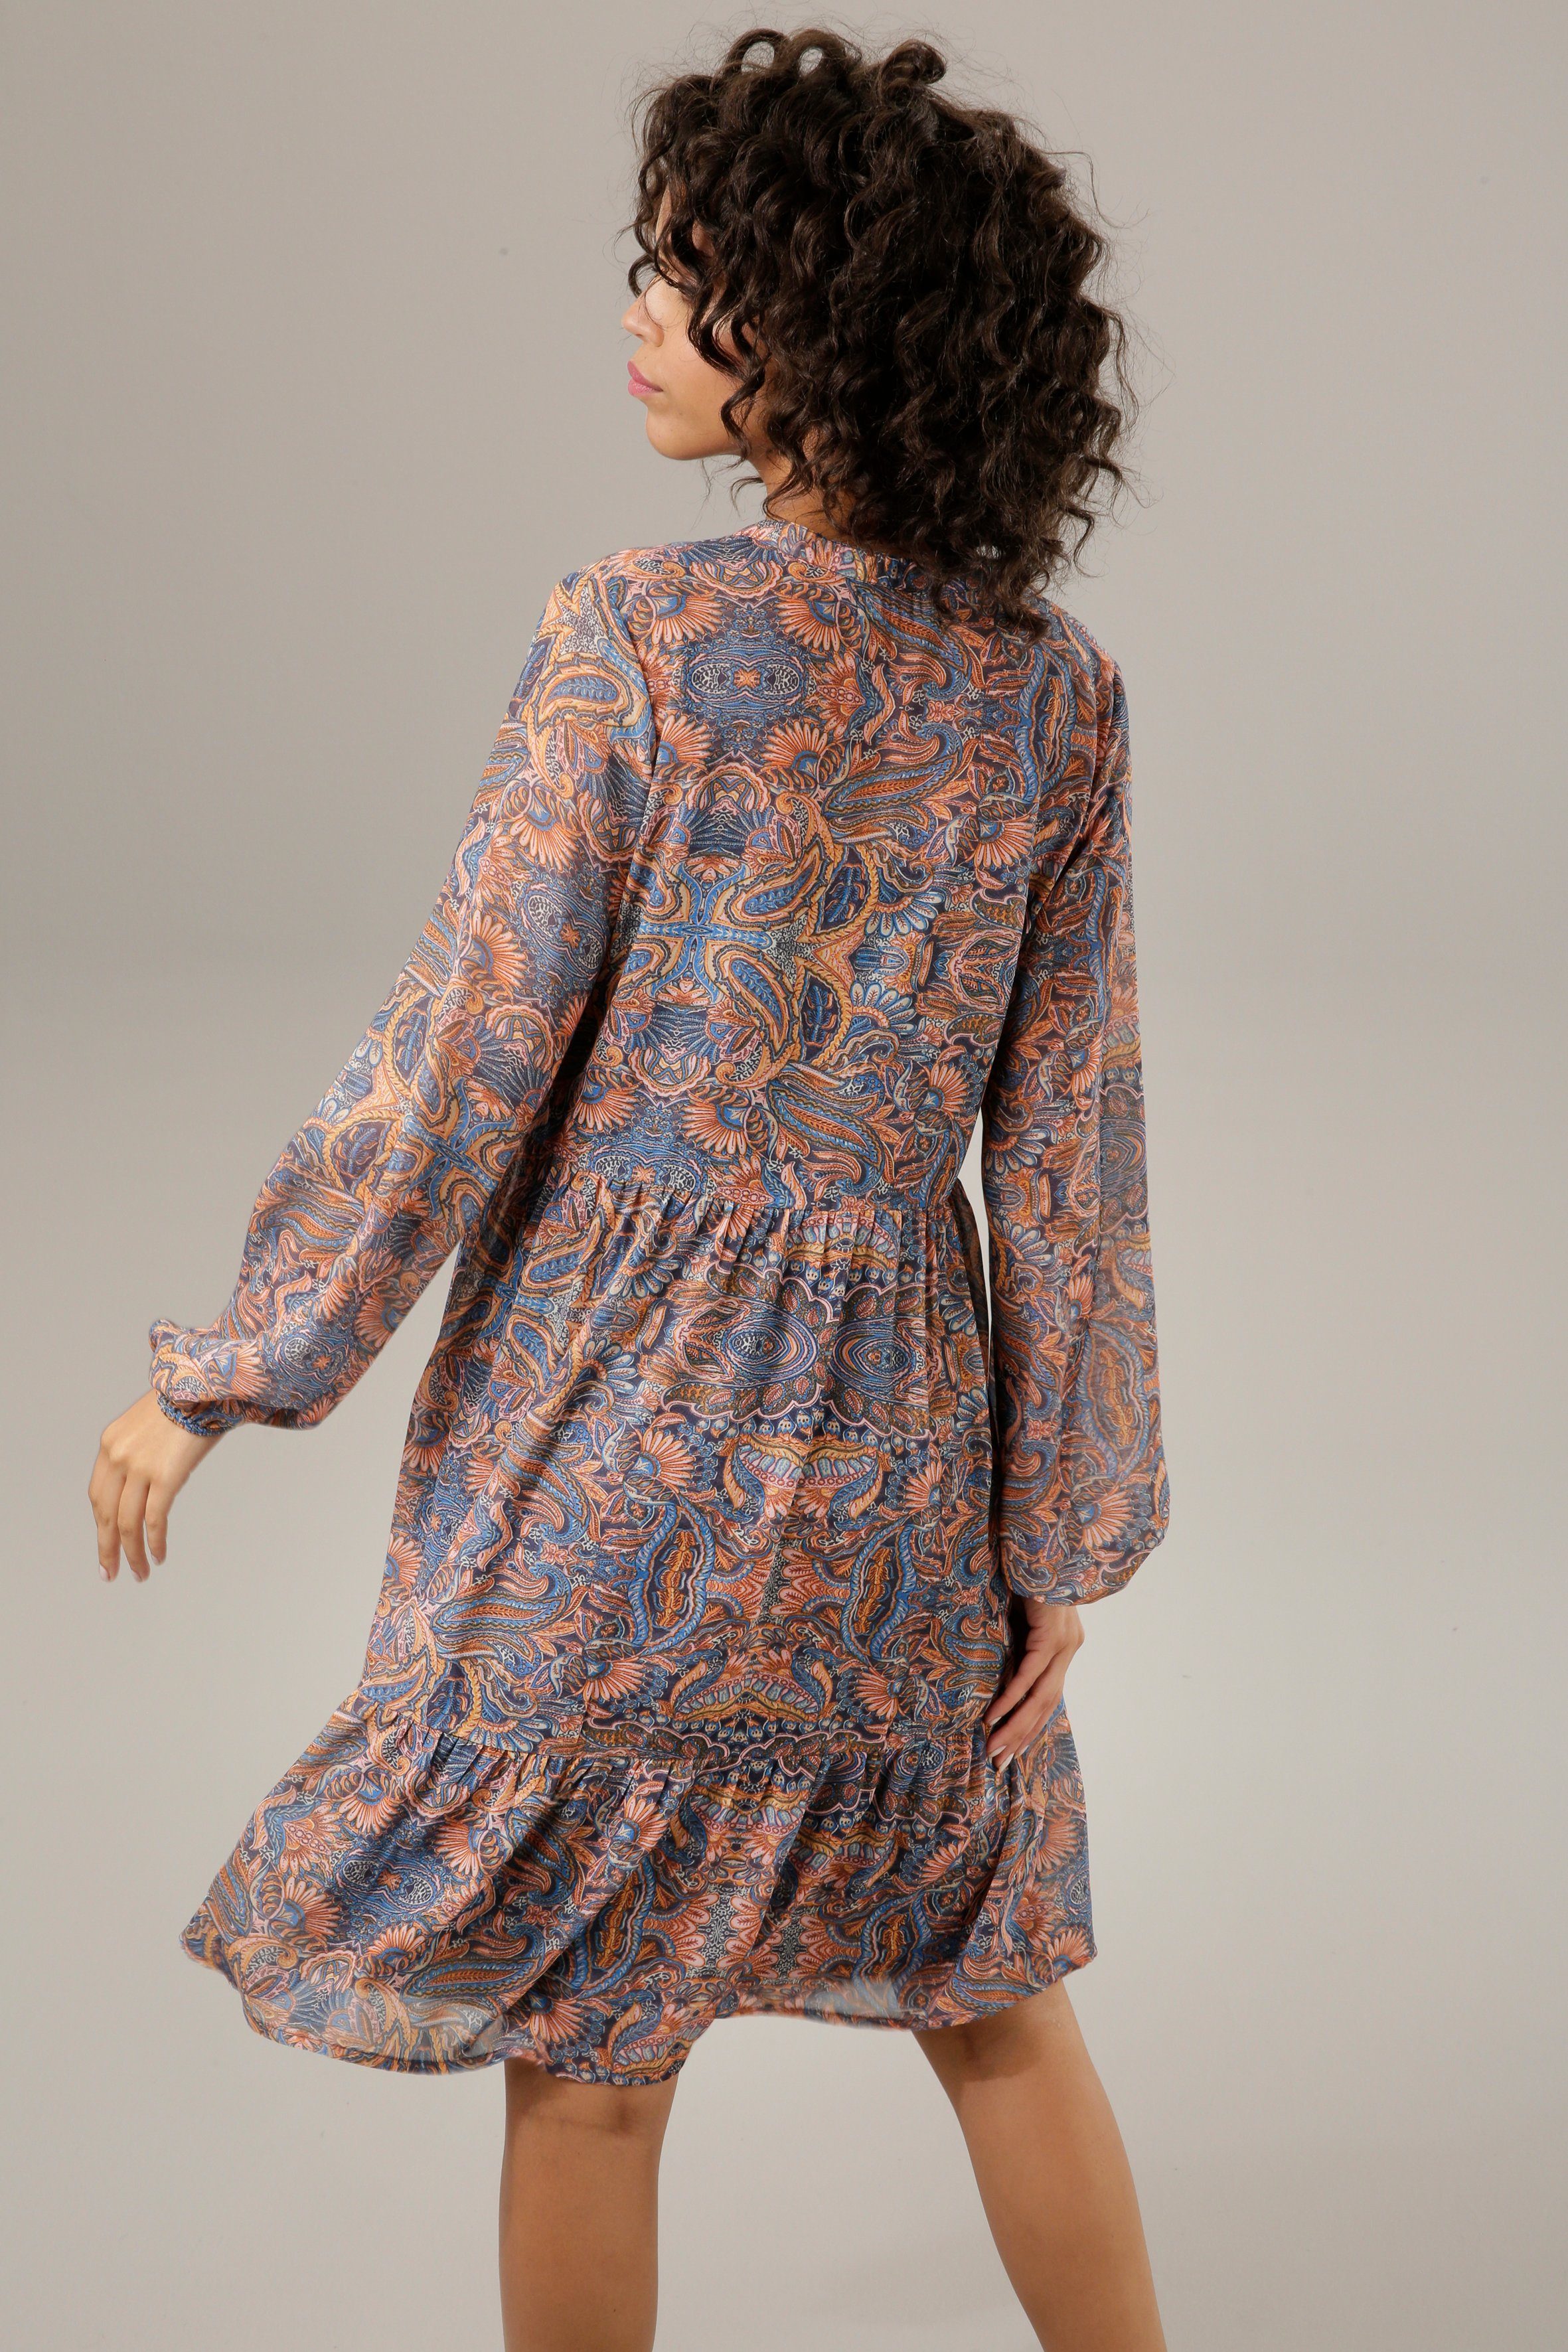 Blusenkleid CASUAL Aniston Paisley-Muster bedruckt phantasievollem mit